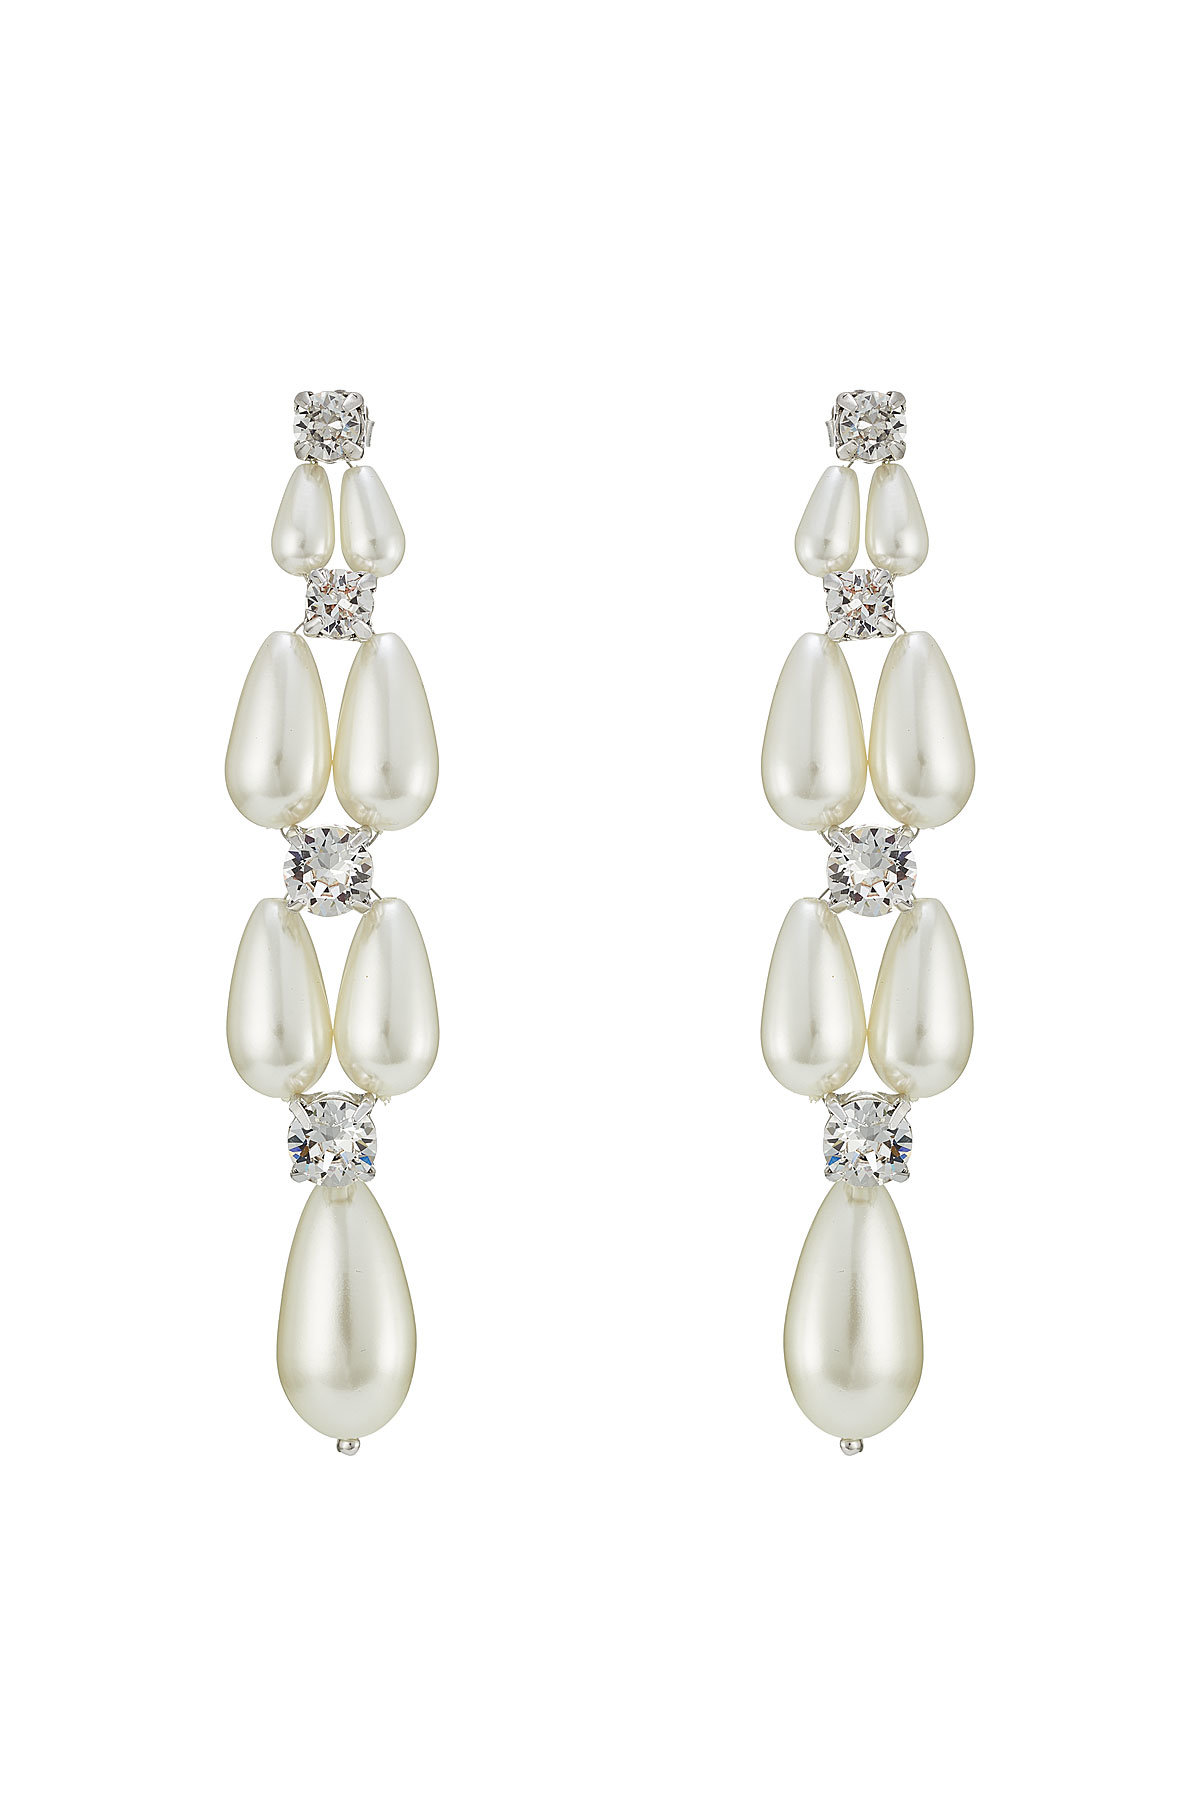 Simone Rocha - Pearl and Crystal-Embellished Earrings